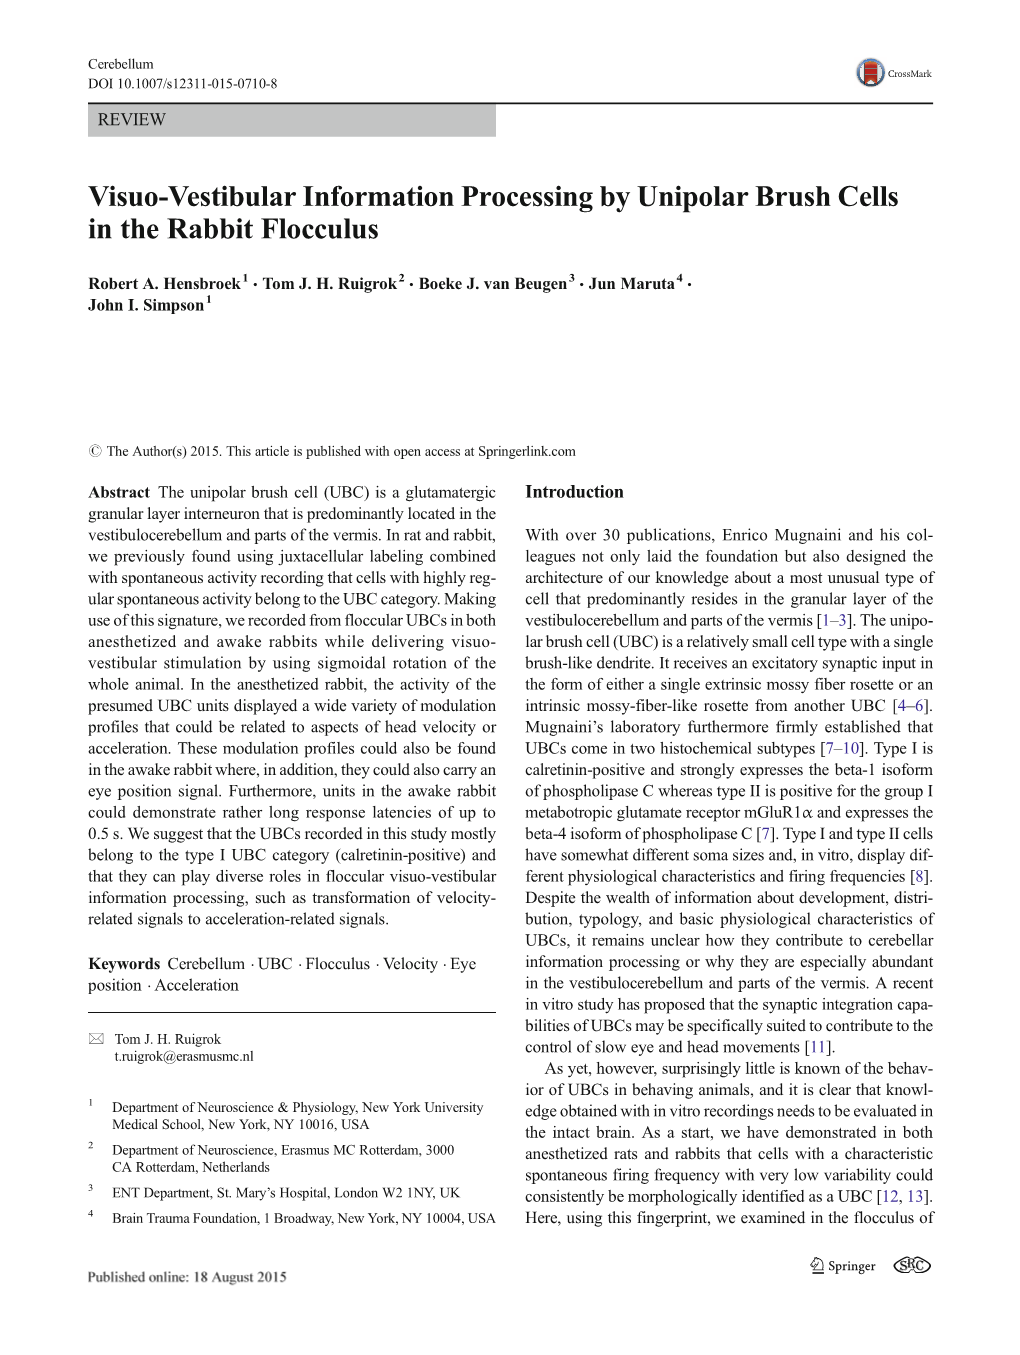 Visuo-Vestibular Information Processing by Unipolar Brush Cells in the Rabbit Flocculus